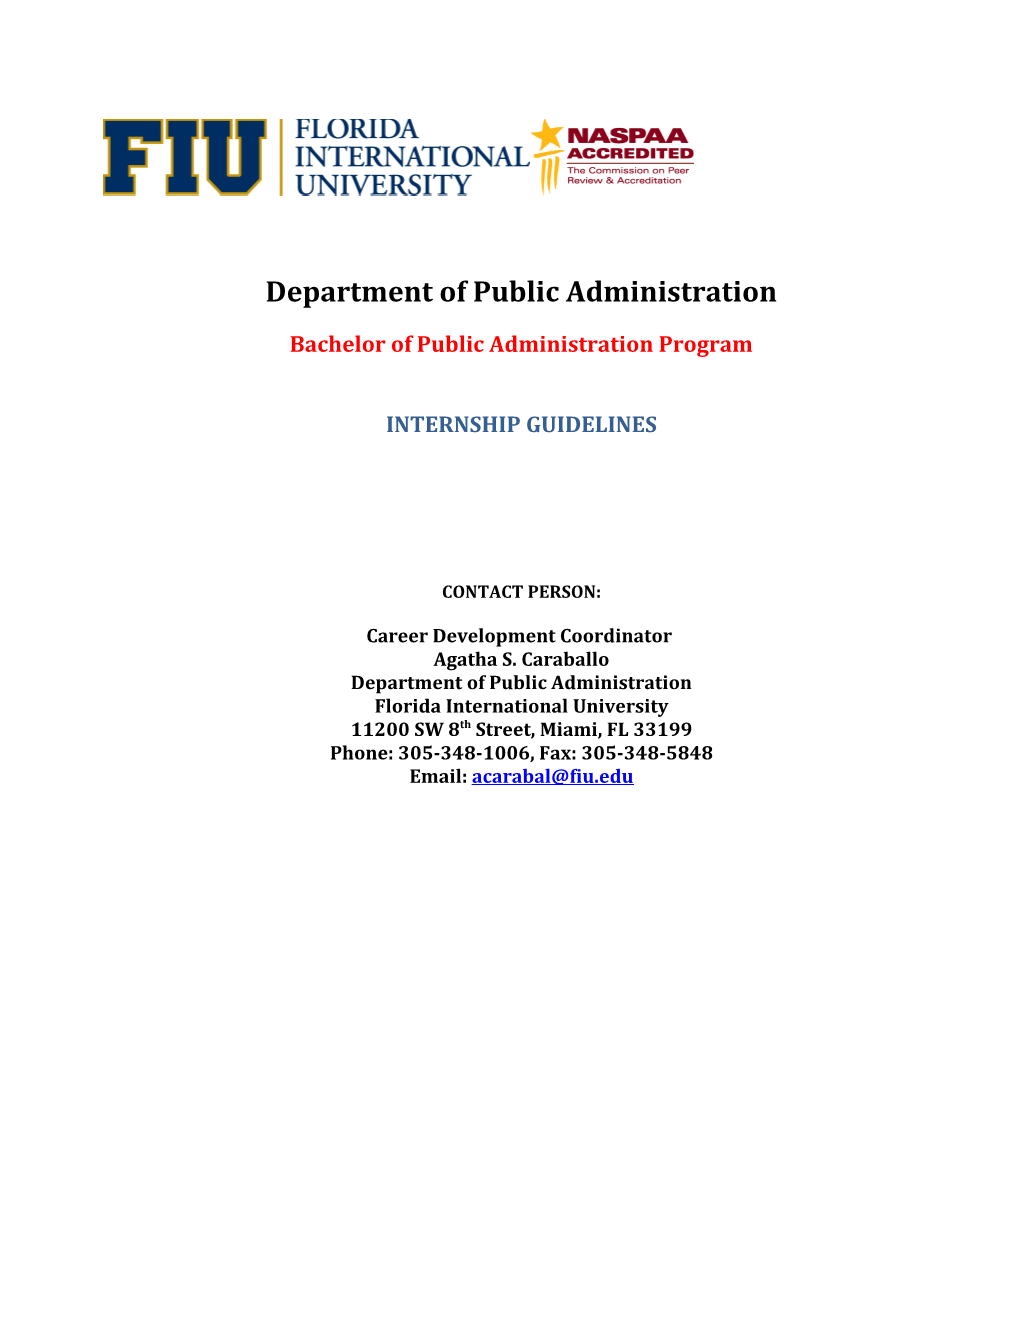 Bachelor of Public Administration Program